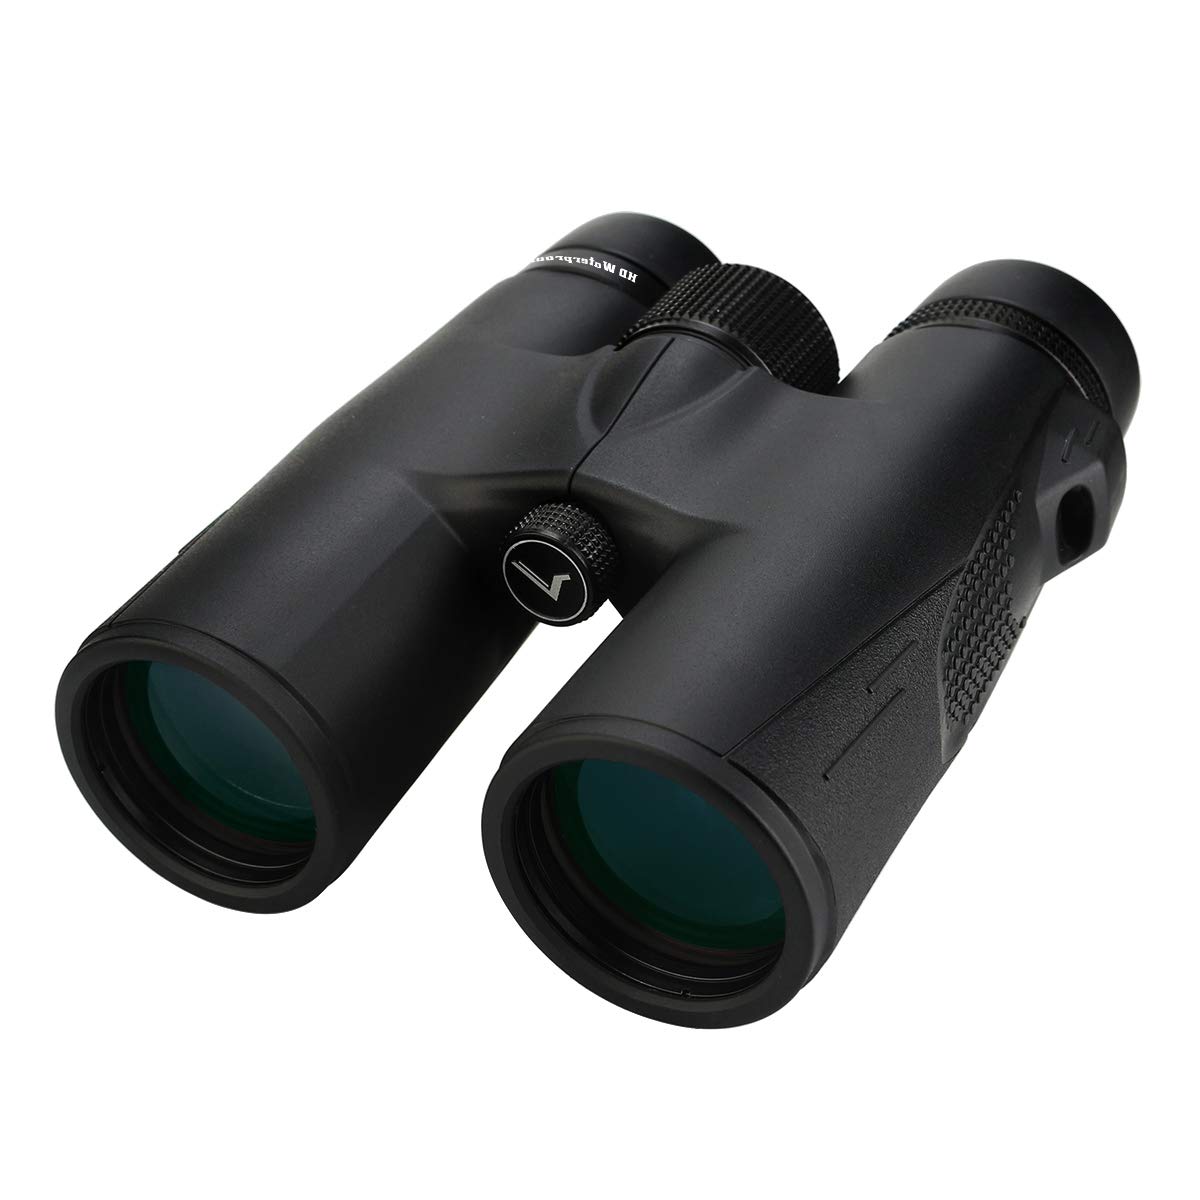 Svbony SV47 Fernglas 8x42, HD Bak-4 Prisma FMC Optik, Wasserdichtes Fernglas Binoculars Erwachsene für Vogelbeobachtung, Naturbeobachtung, Safari